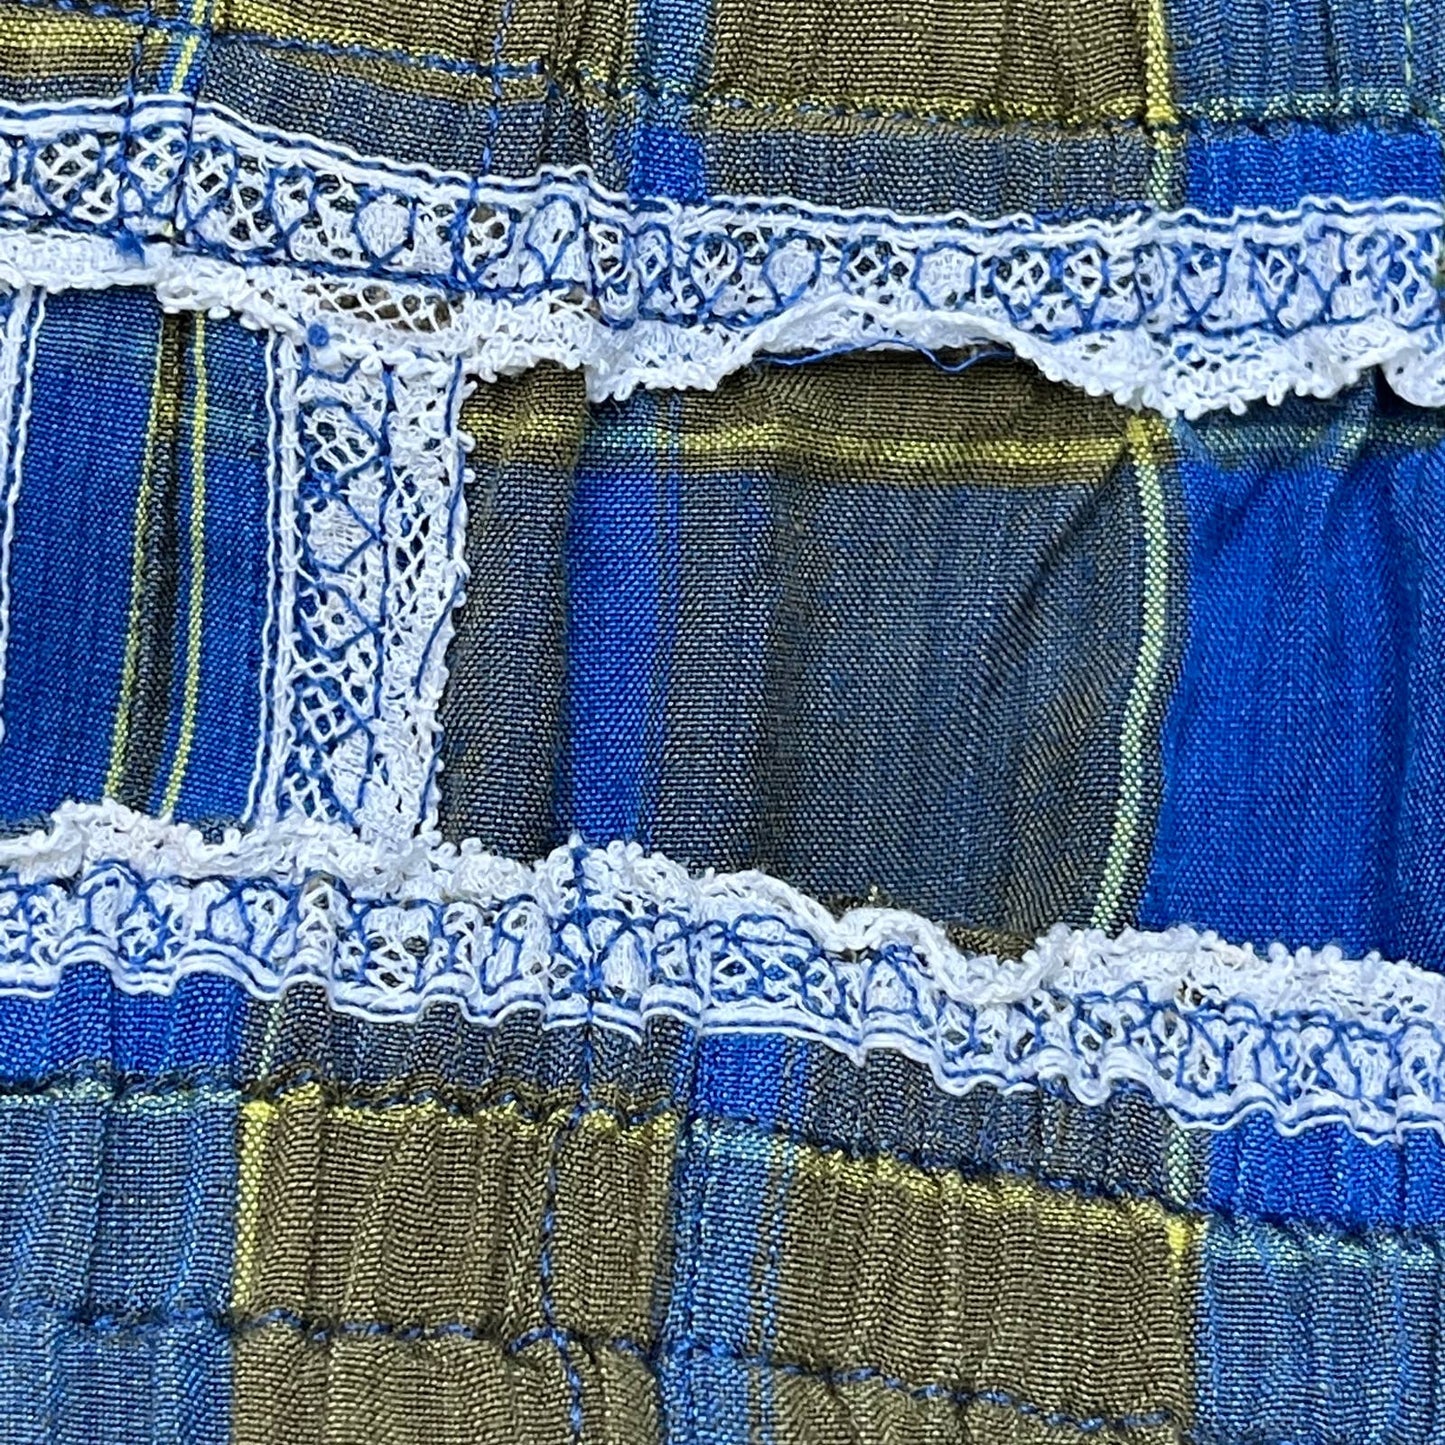 Vintage Blue Green Plaid Midi Skirt Ikat Geometric Cotton Slit Handmade Size M L